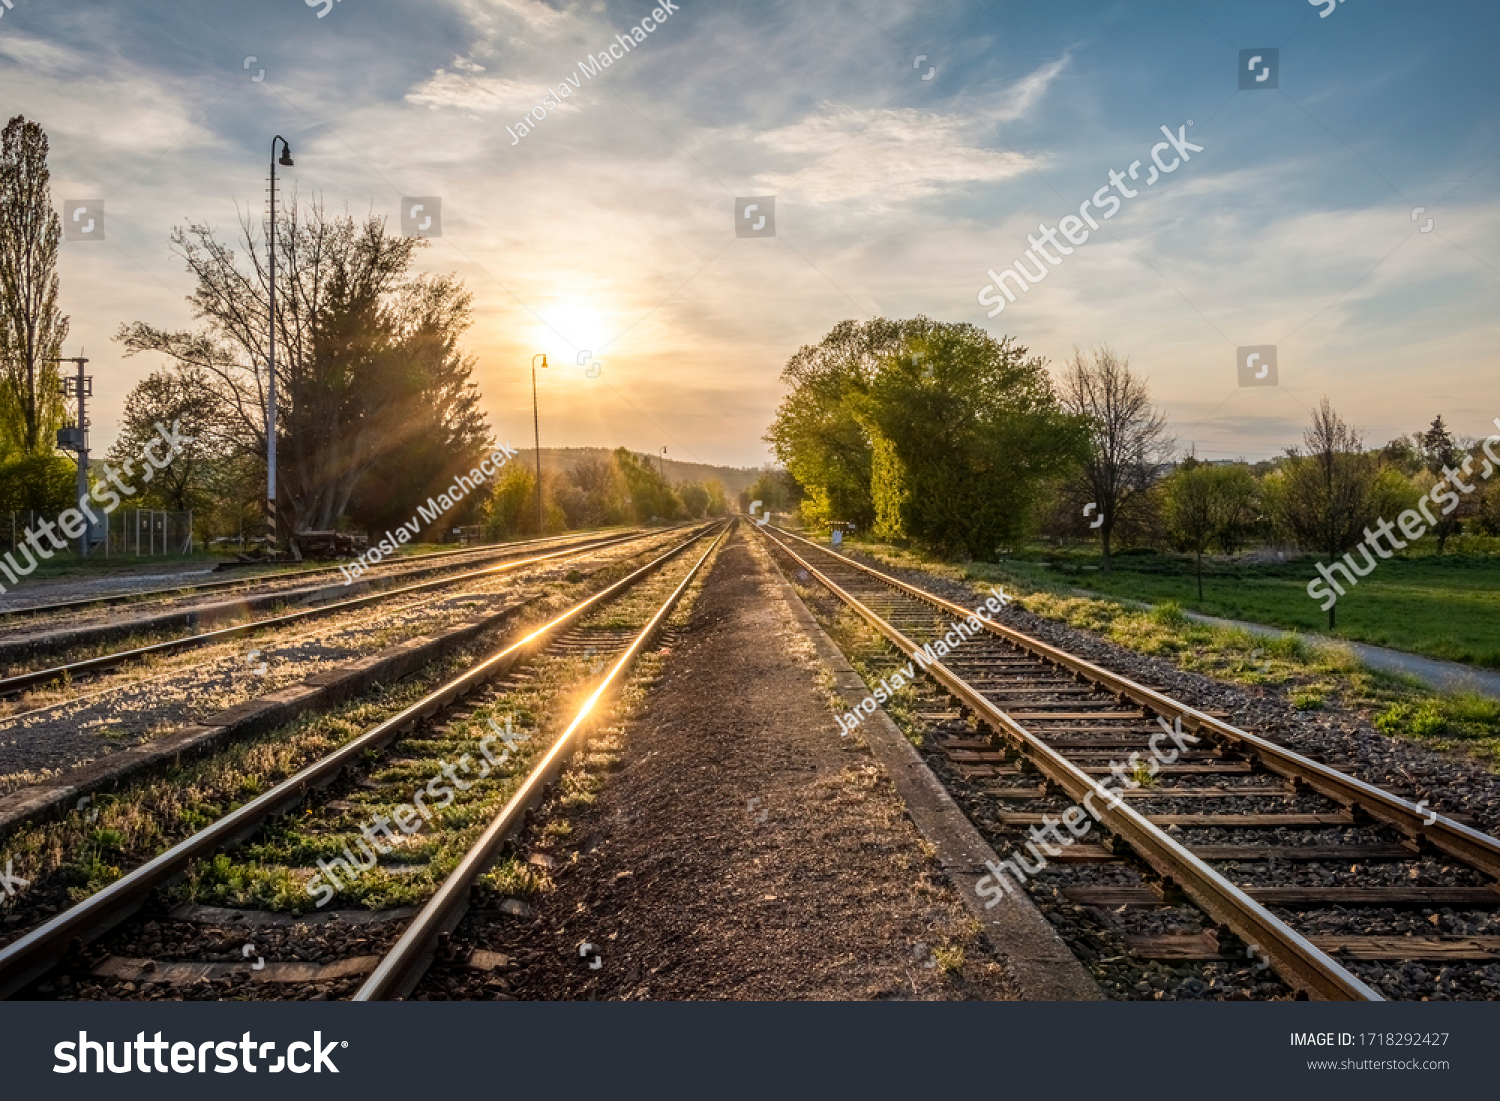 Spring sunset on railway tracks - Czech Republic, Europe #1718292427